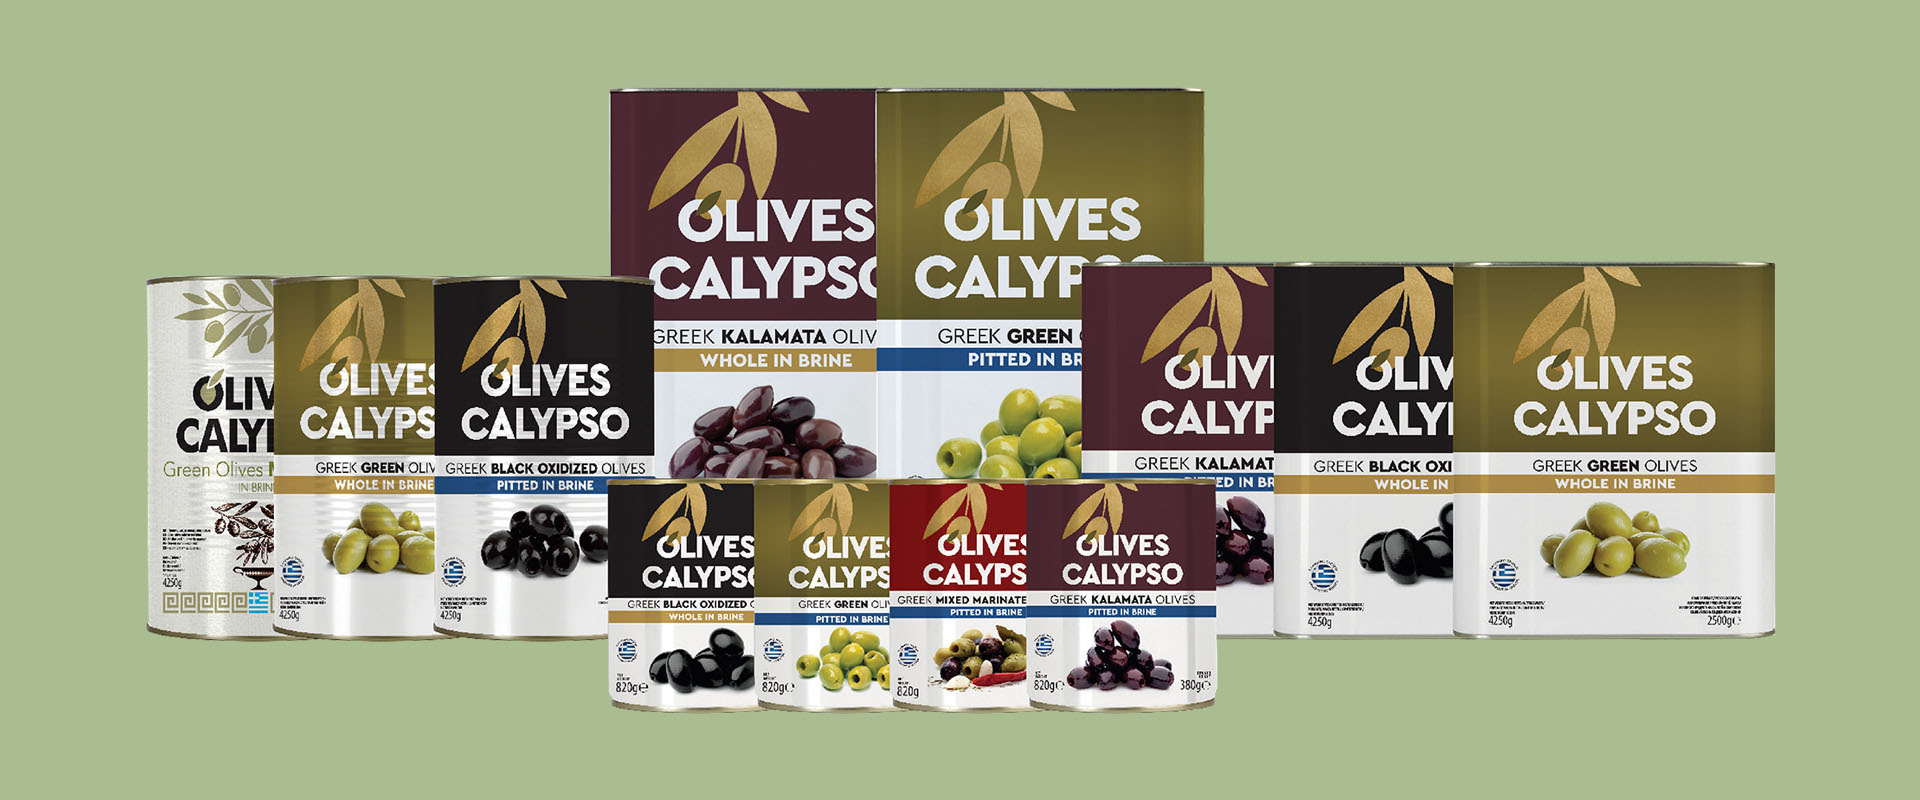 pvg-calypso-olives